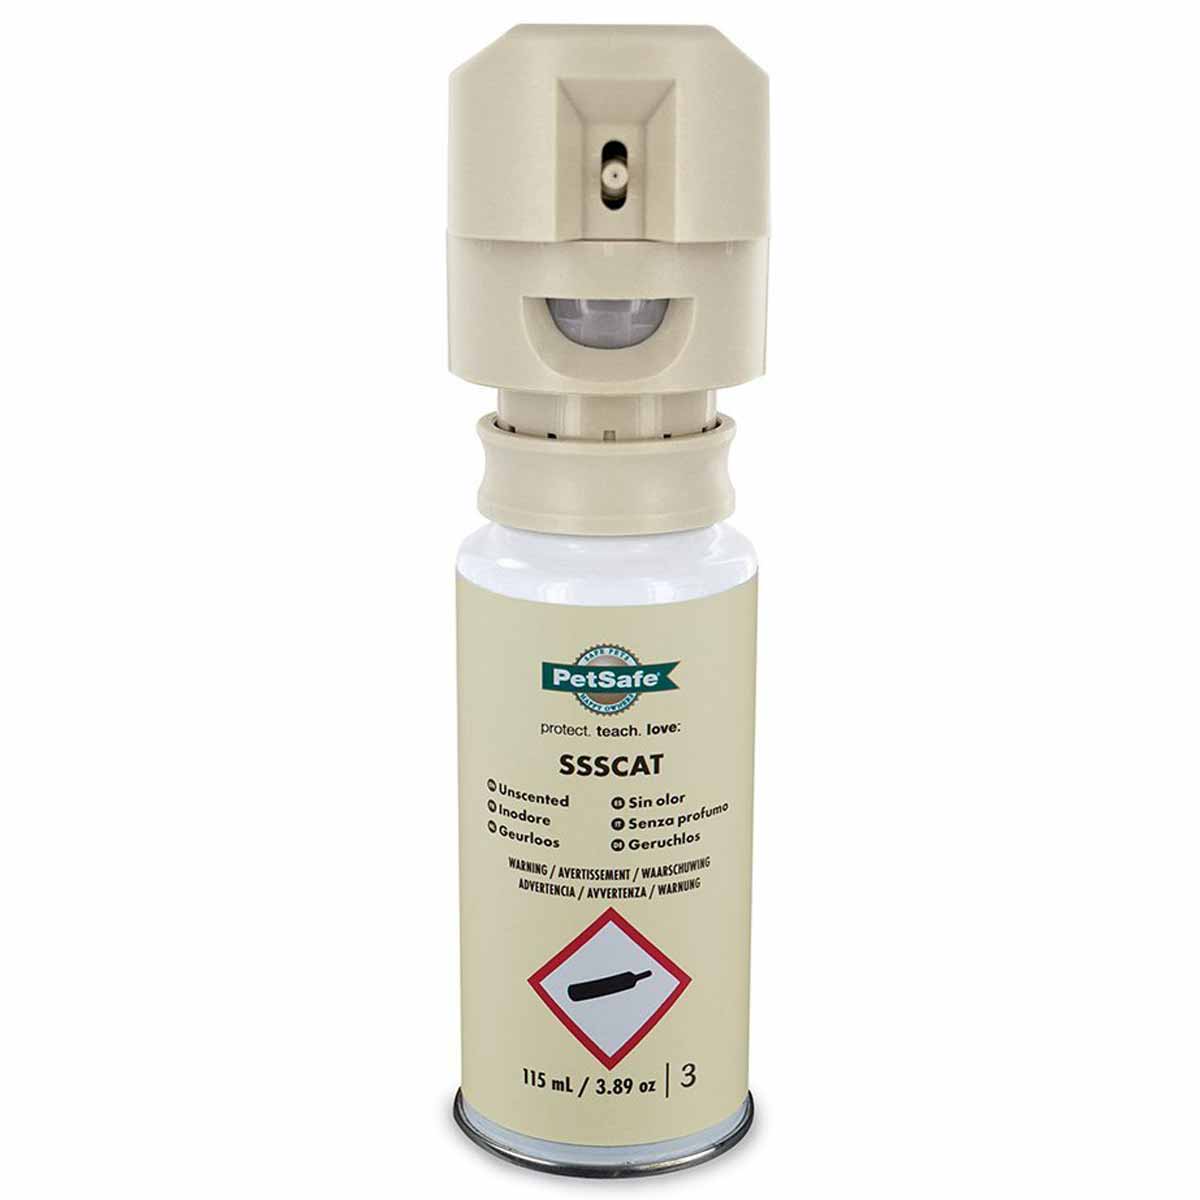 PetSafe Spray Deterrent SSSCAT 115 ml